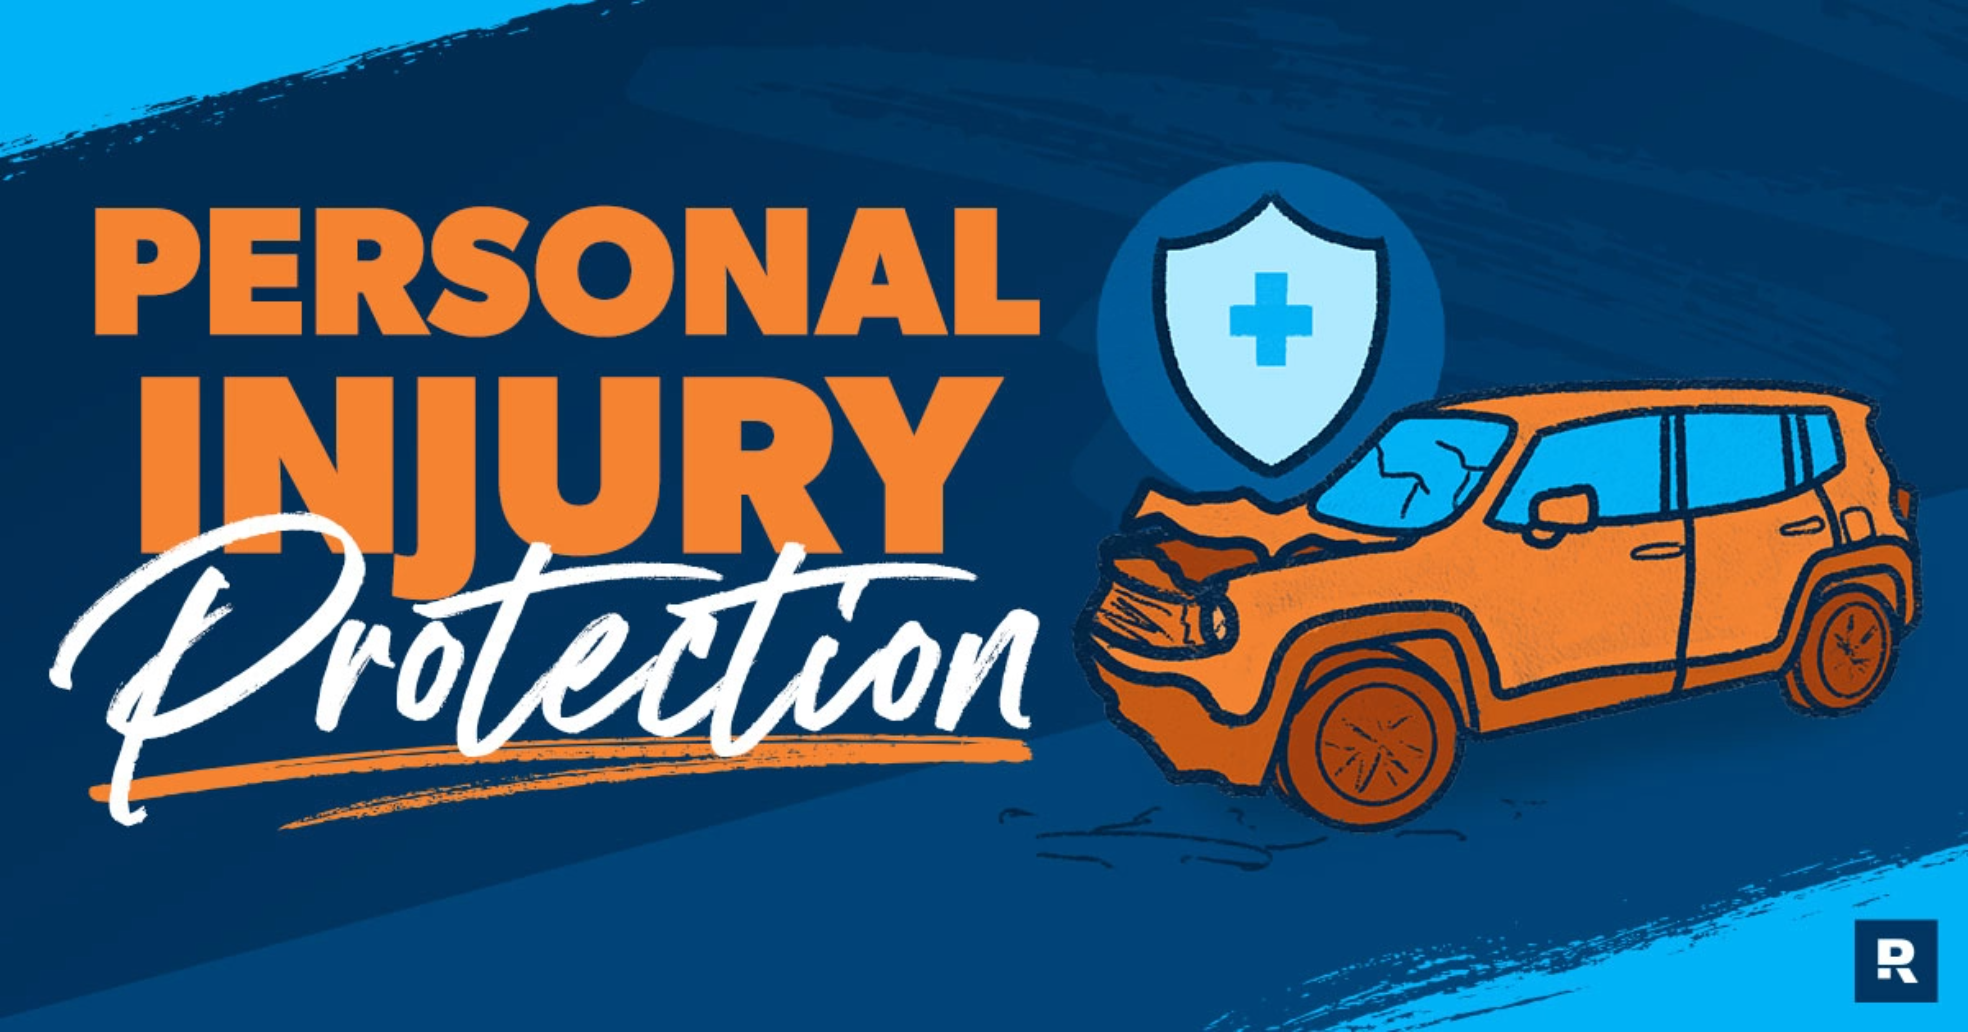 Personal Injury Protection blog header